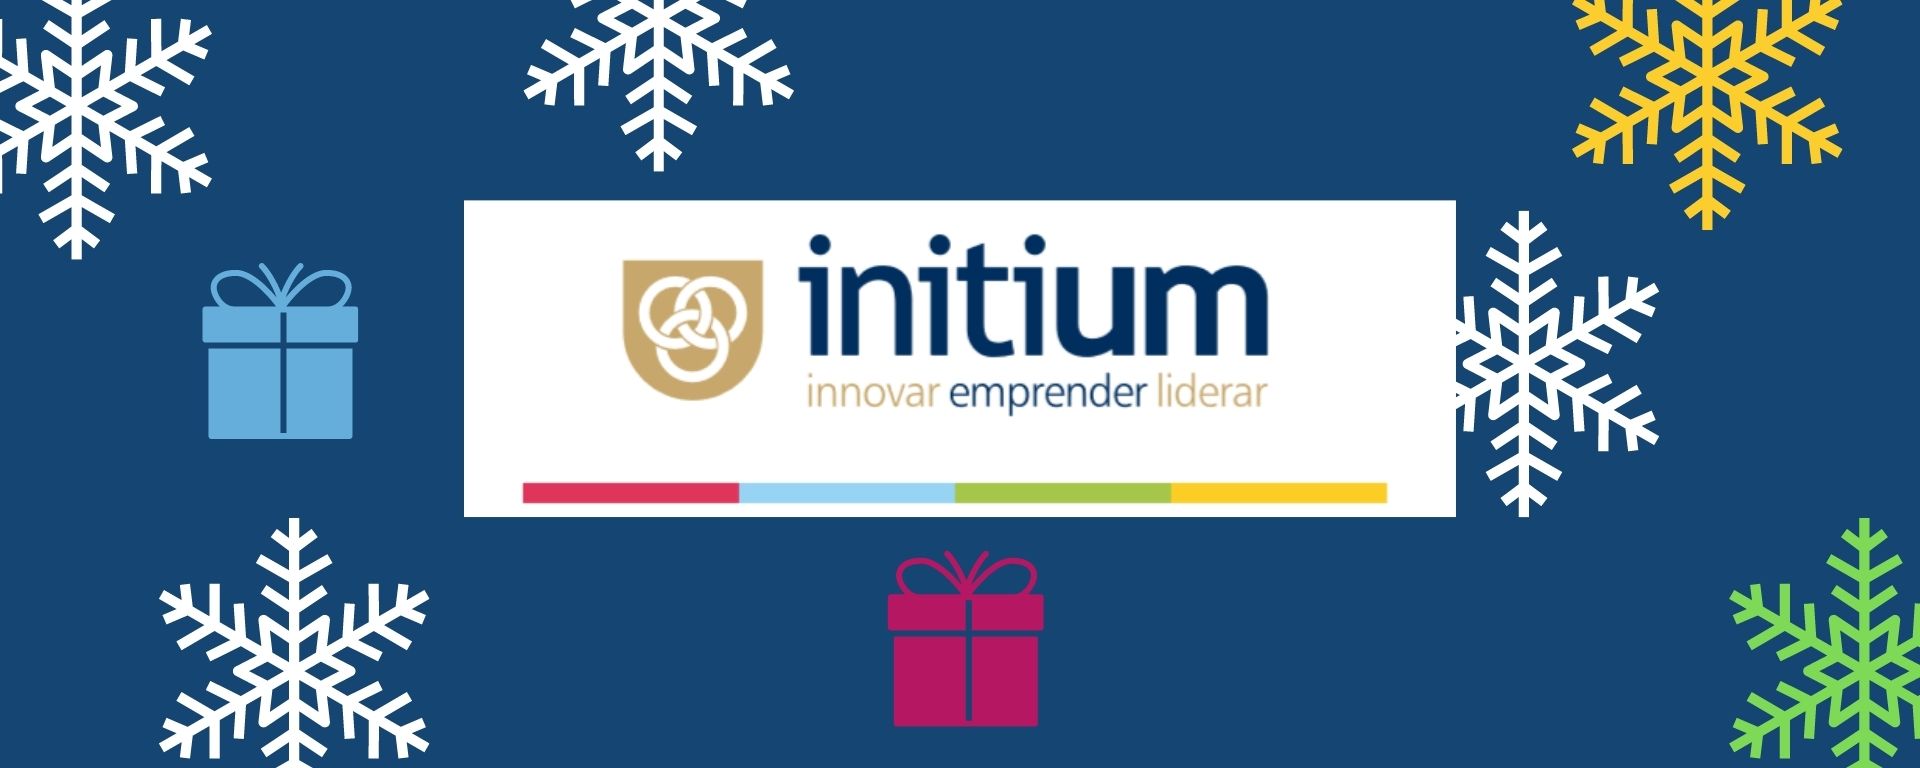 Catálogo navideño de emprendimientos apoyados por Initium